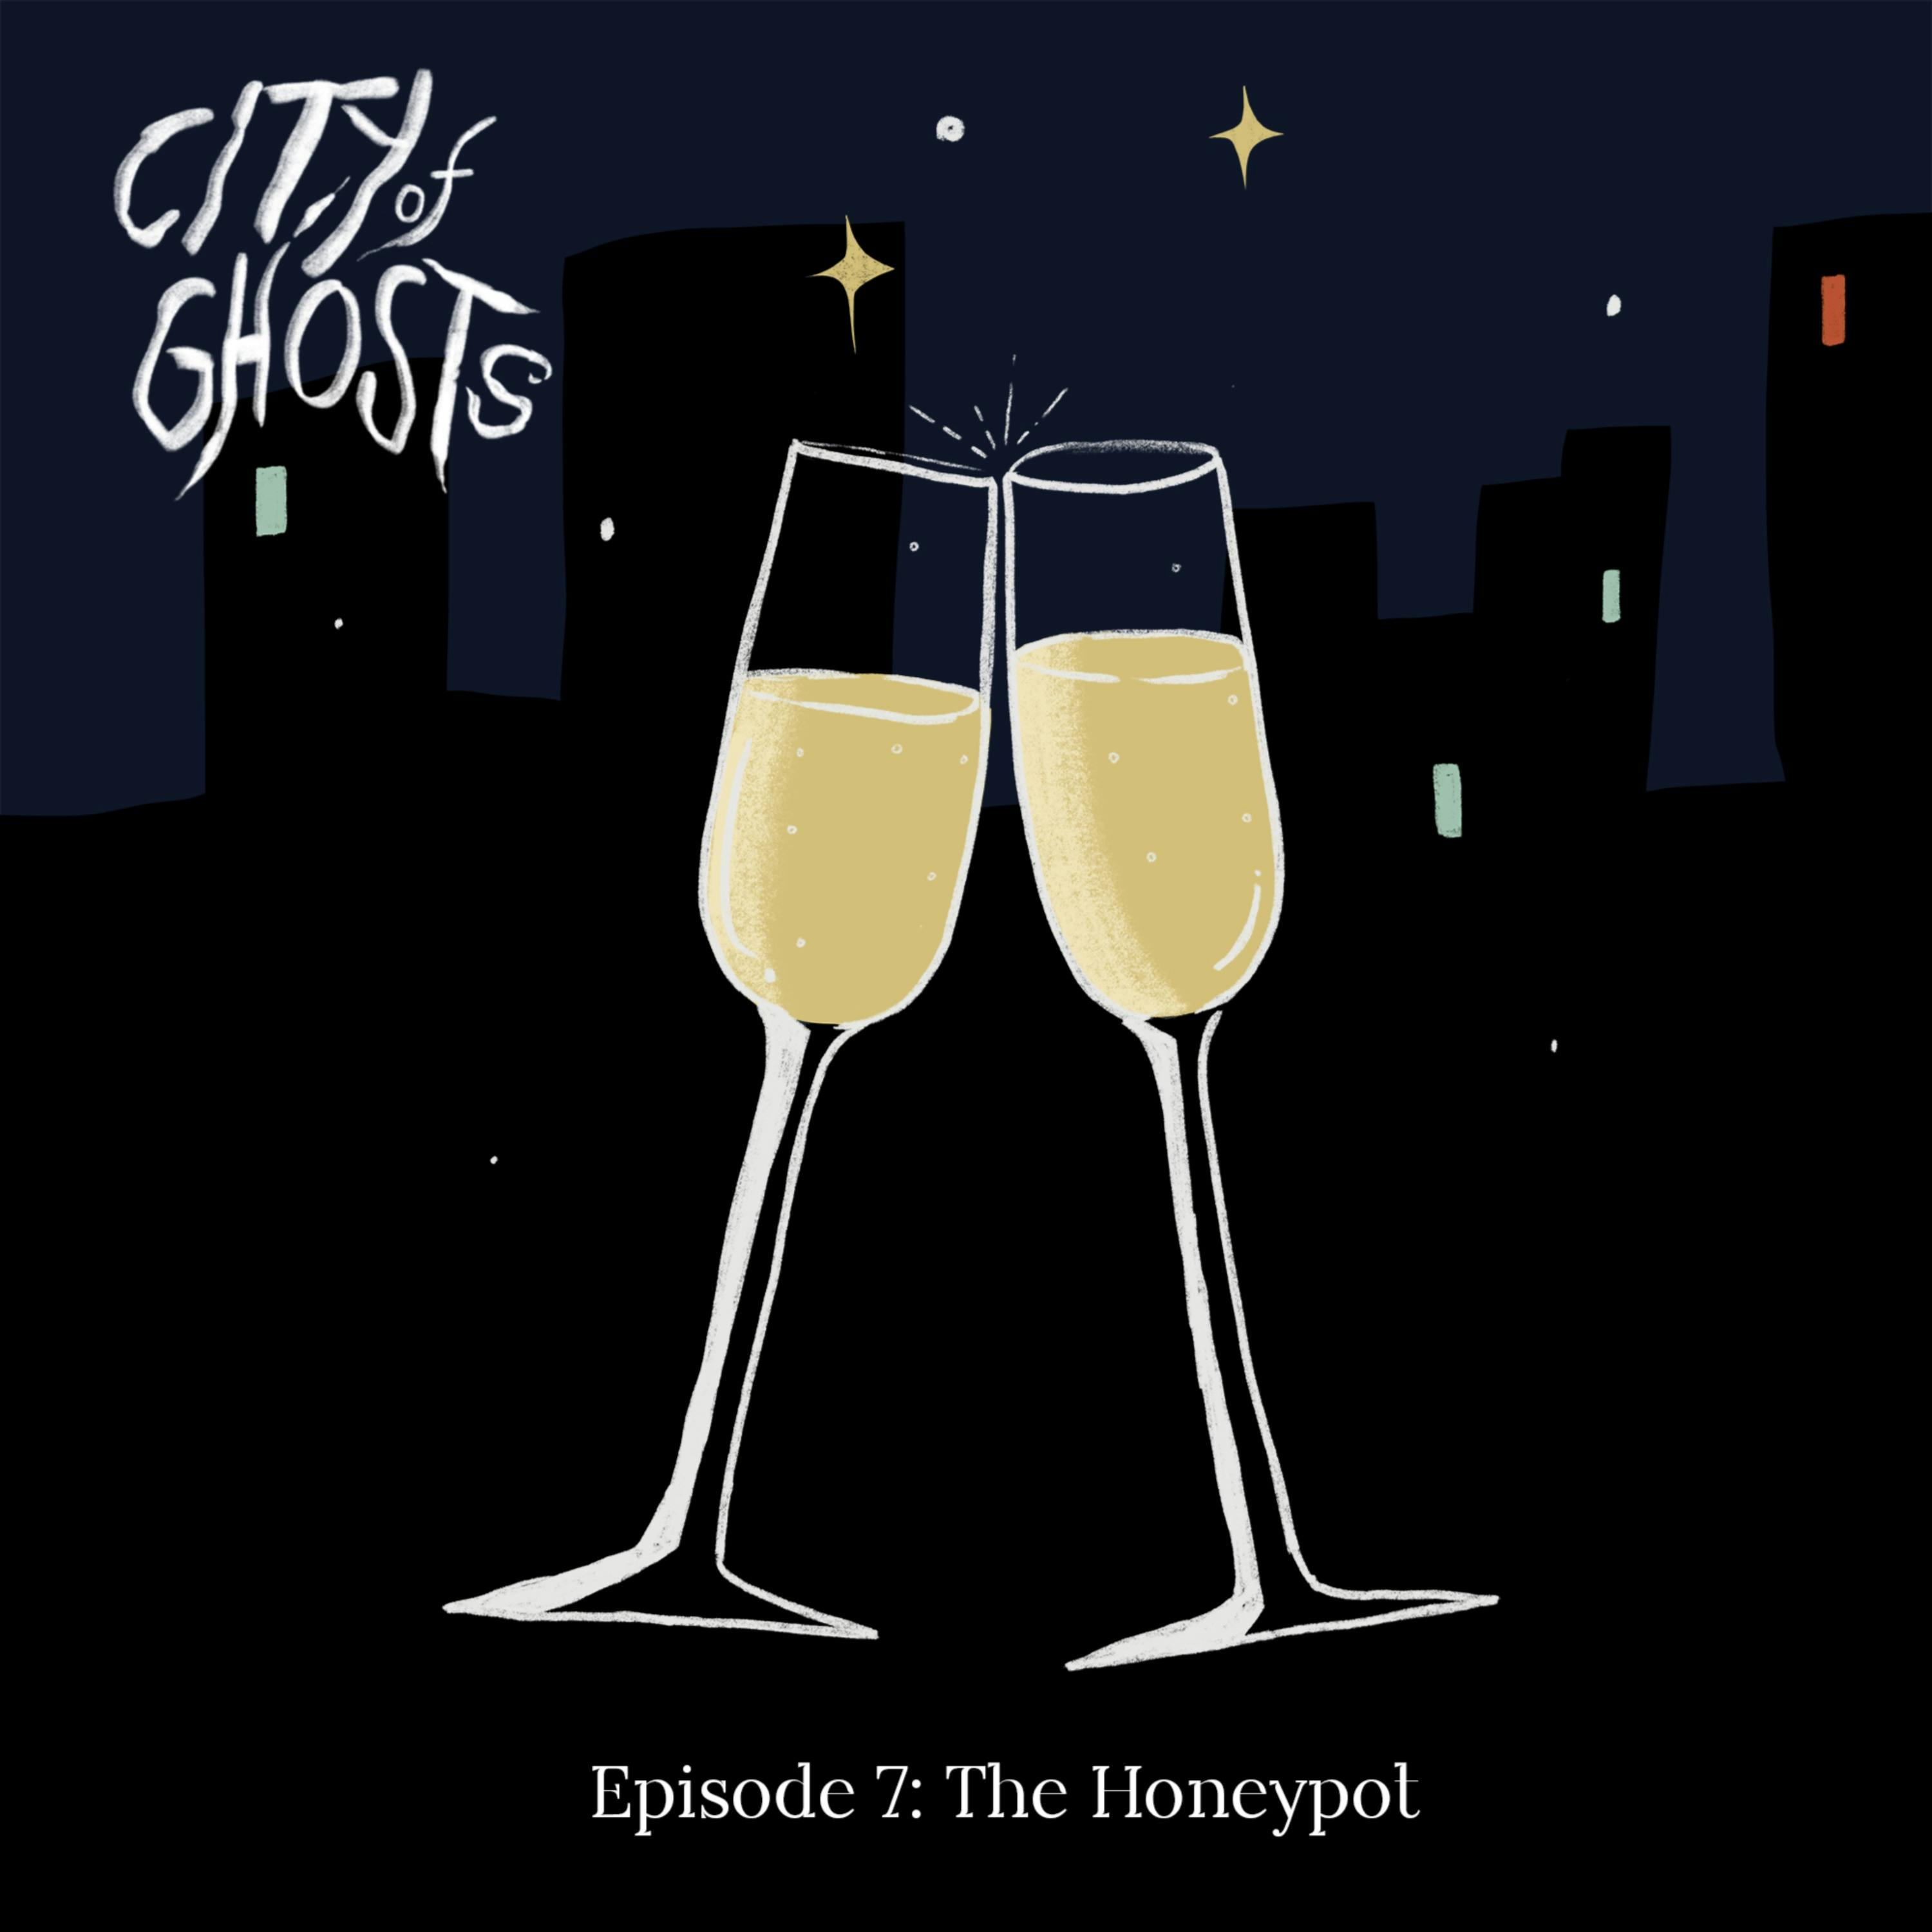 Episode 7: The Honeypot